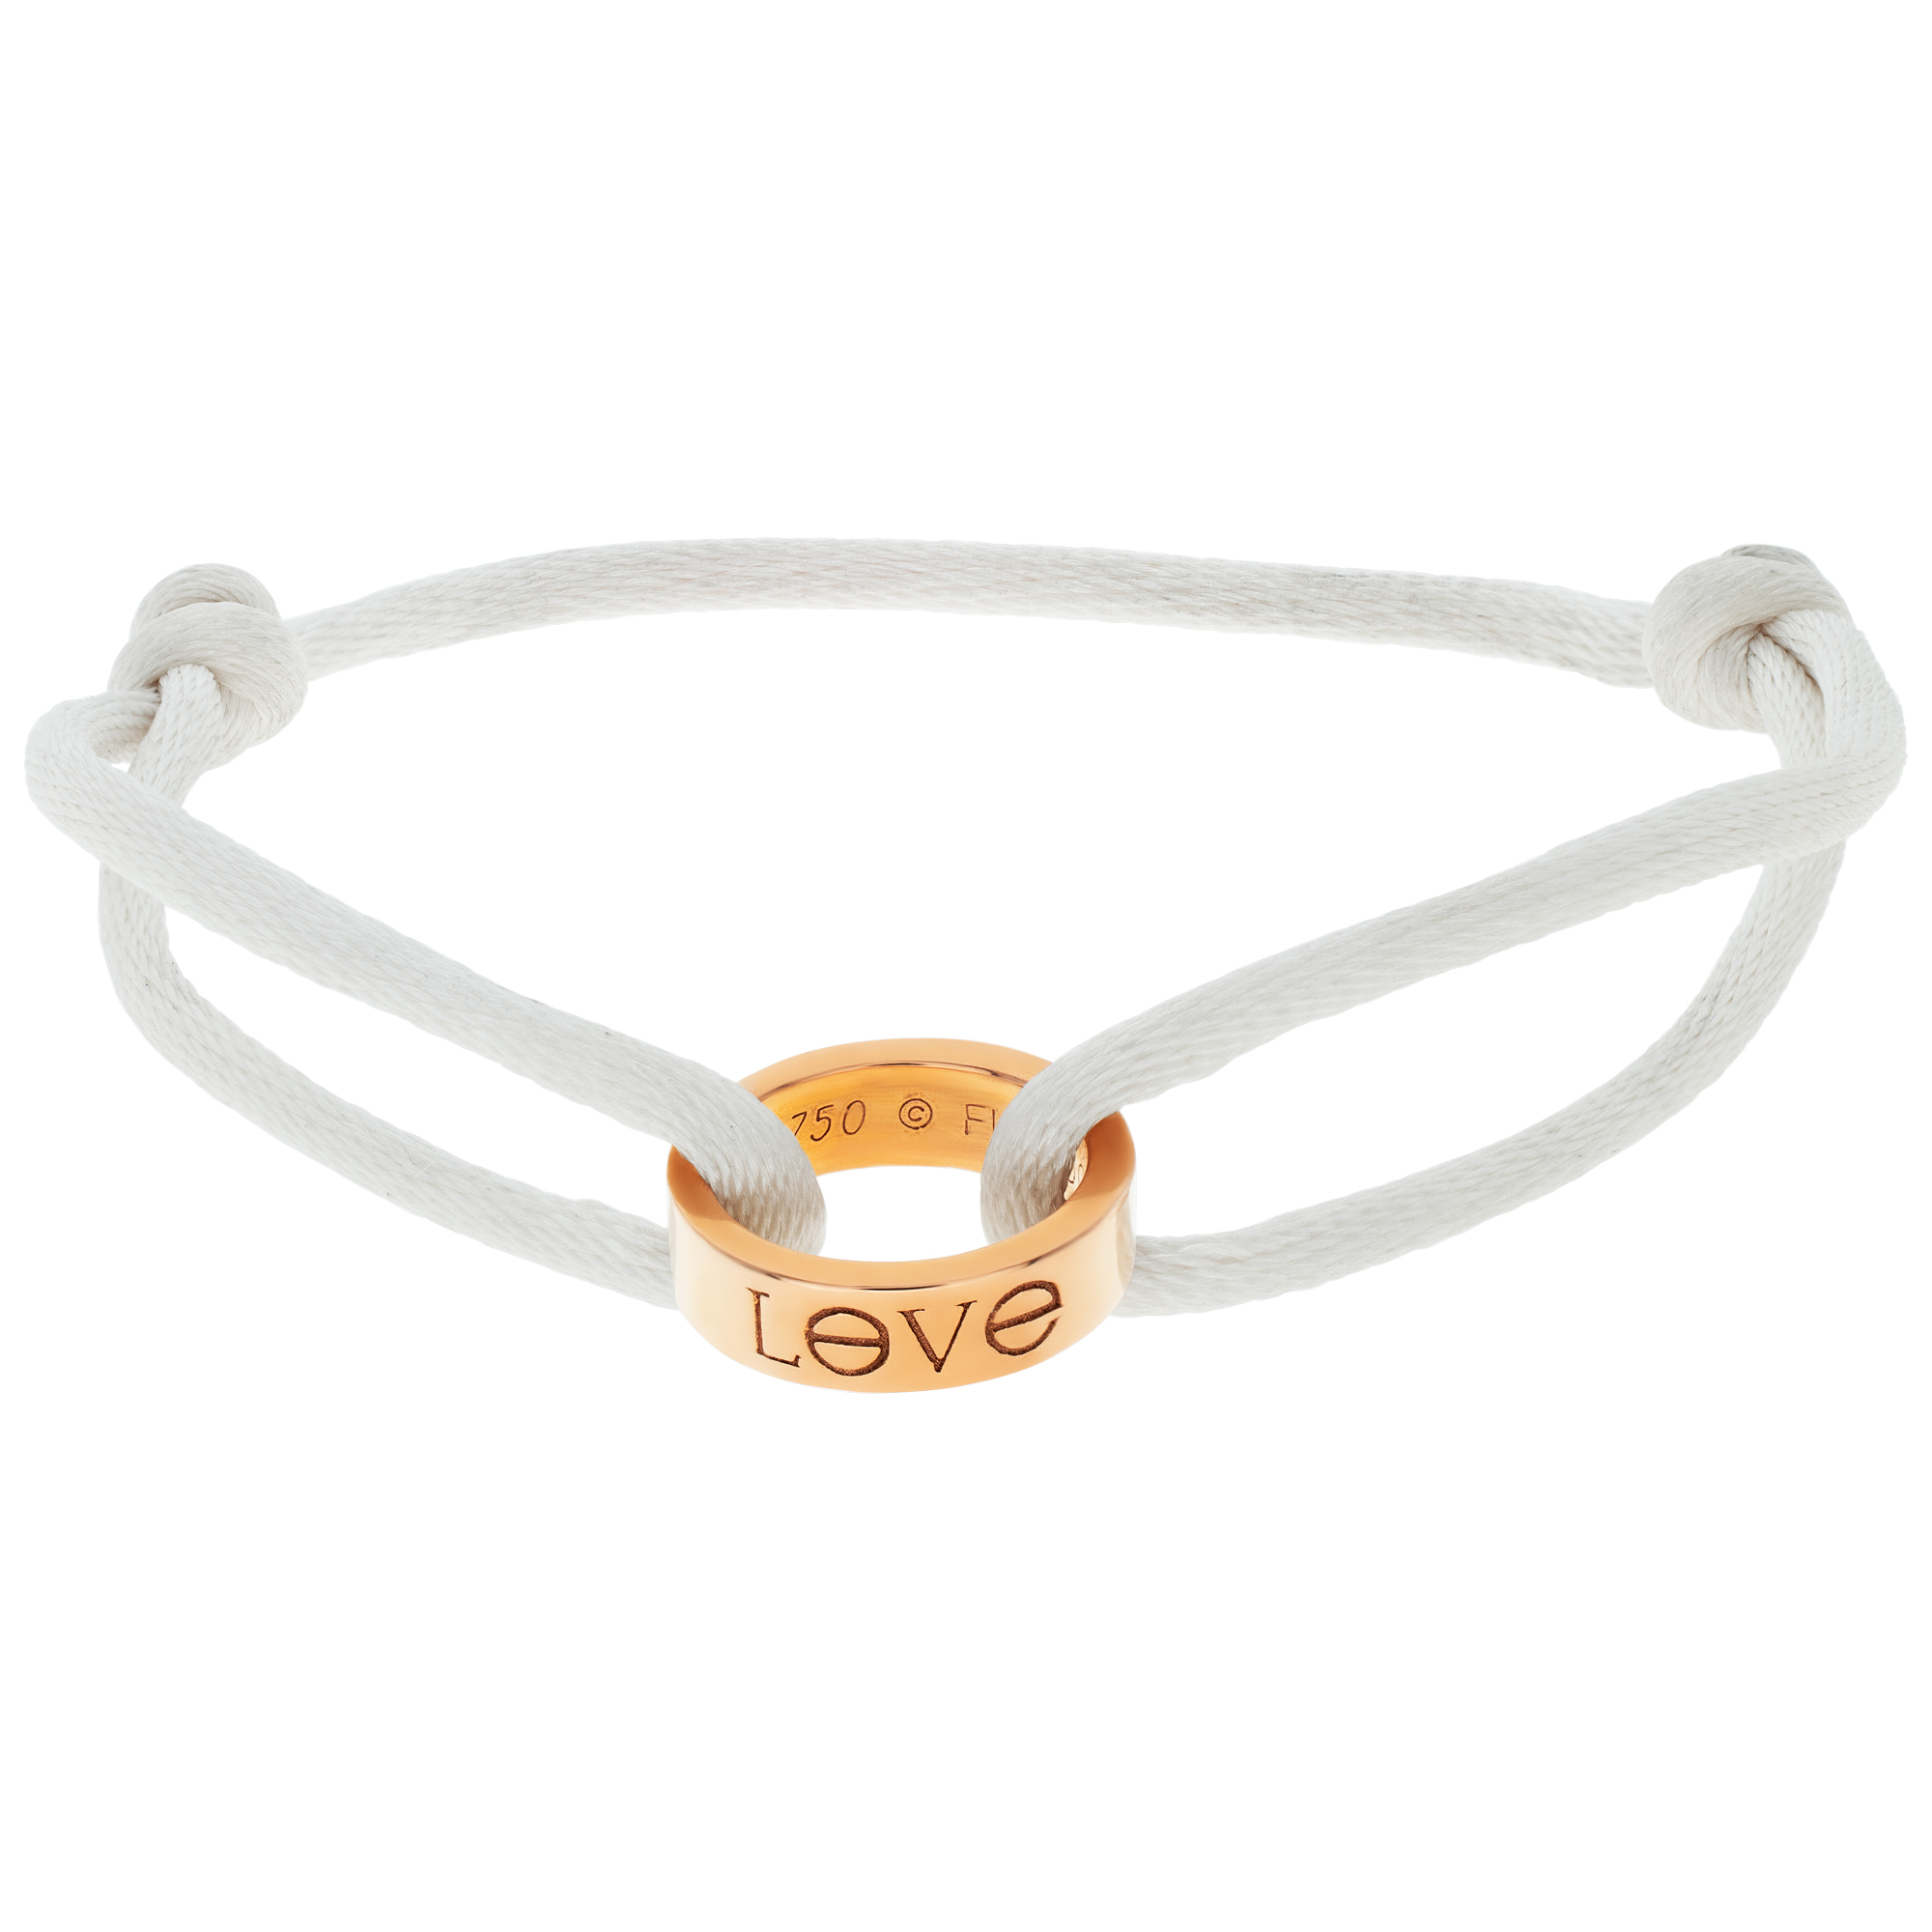 Small Cartier Love silk cord bracelet in 18k rose gold